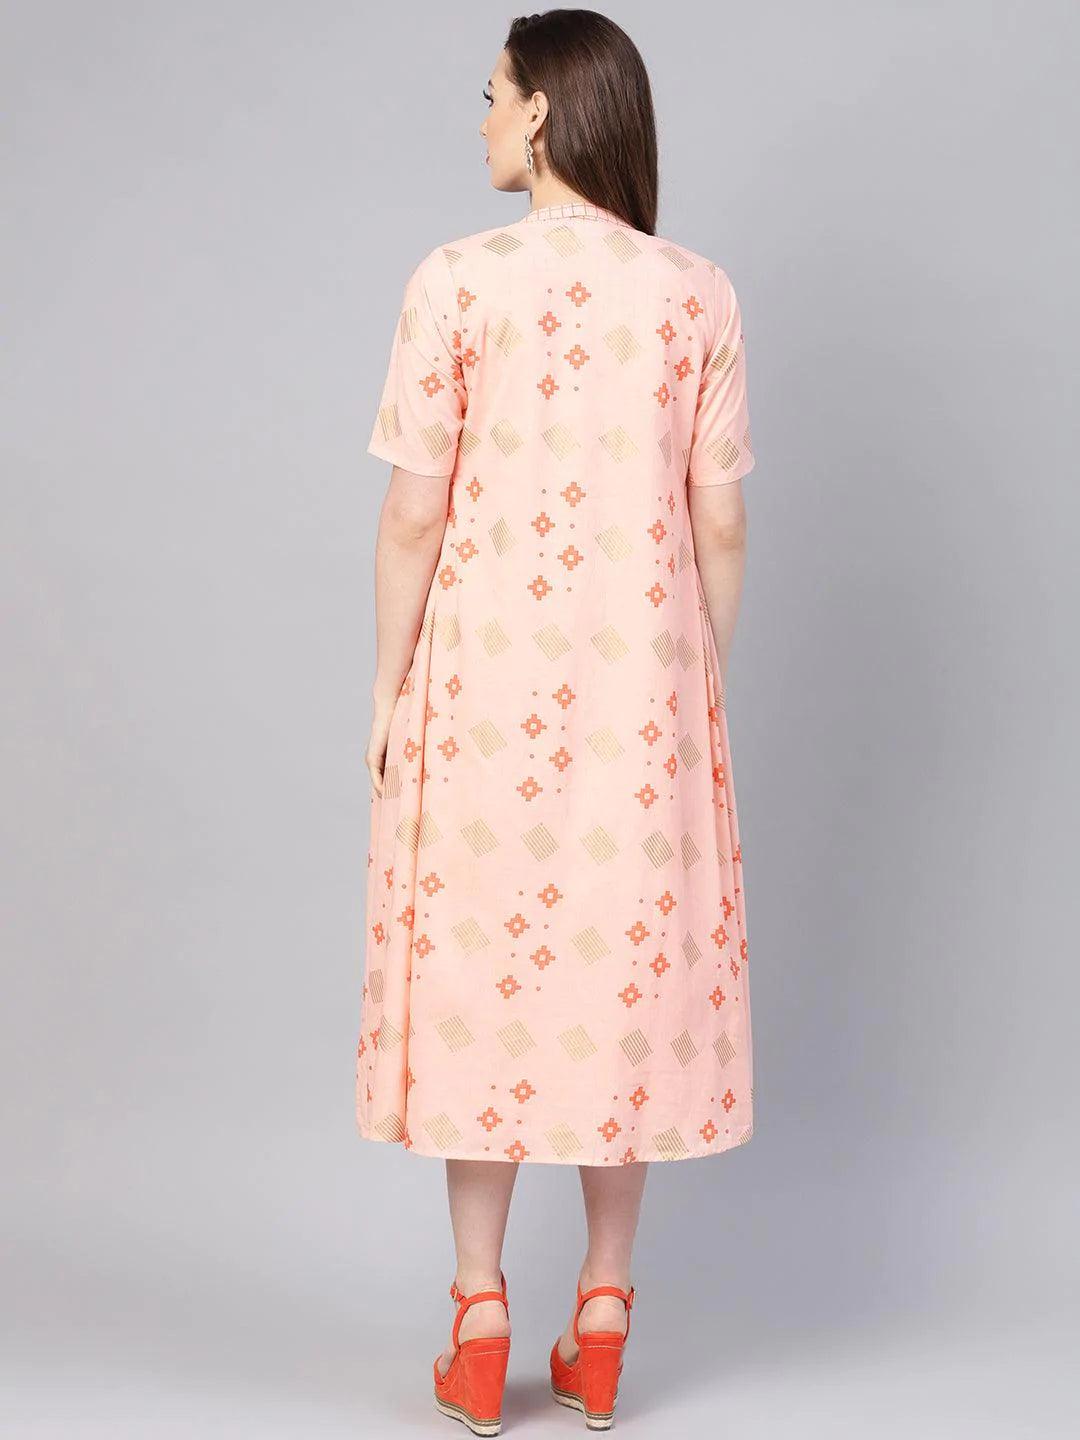 Pink Printed Cotton Dress With Jacket - ShopLibas